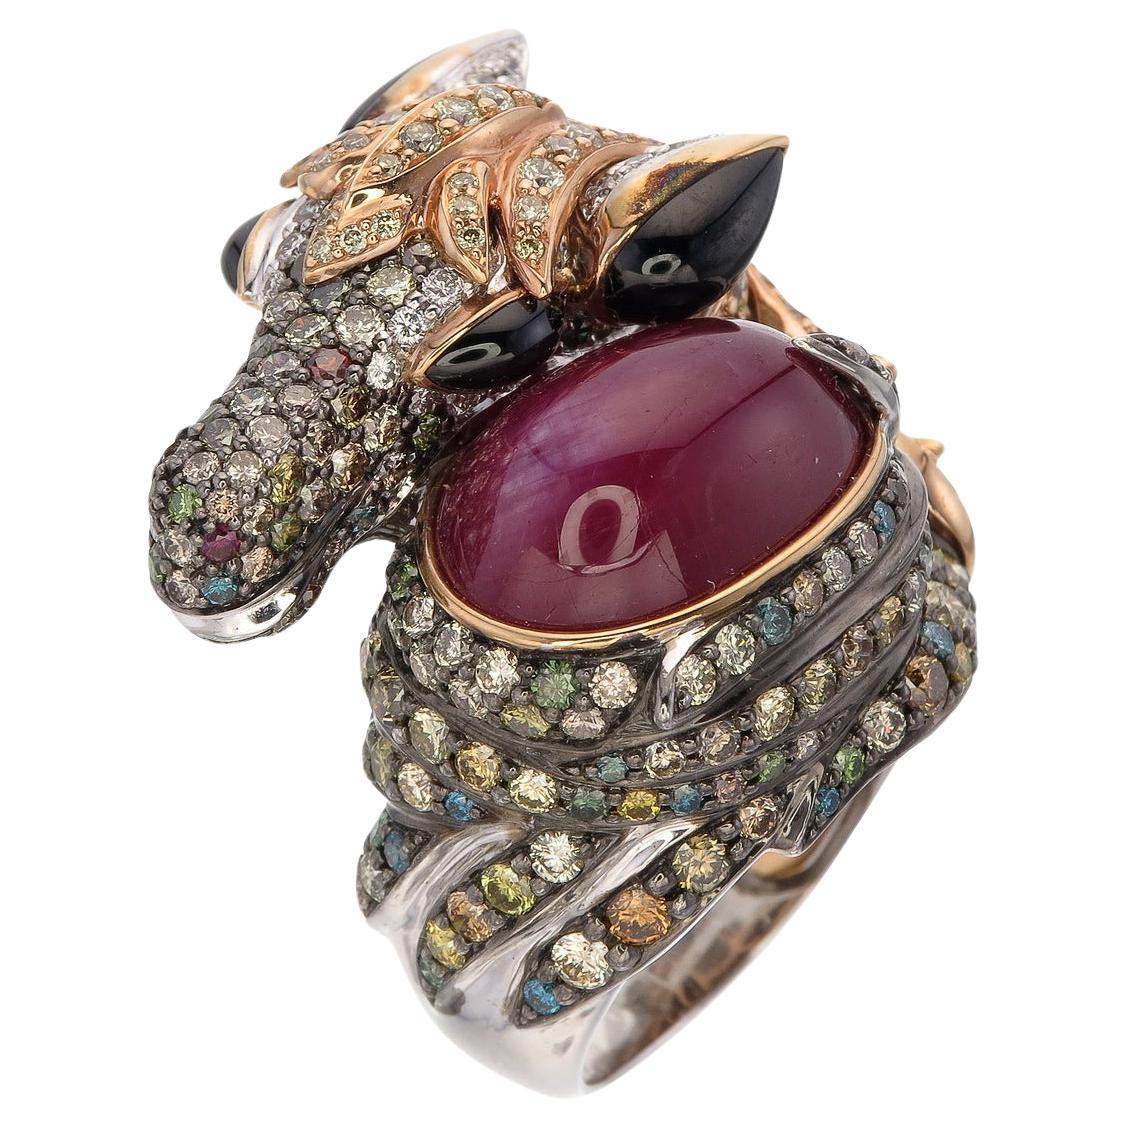 Zorab Creation Dazzling Equestrian Elegance Ring  with 18.76 carat Ruby 